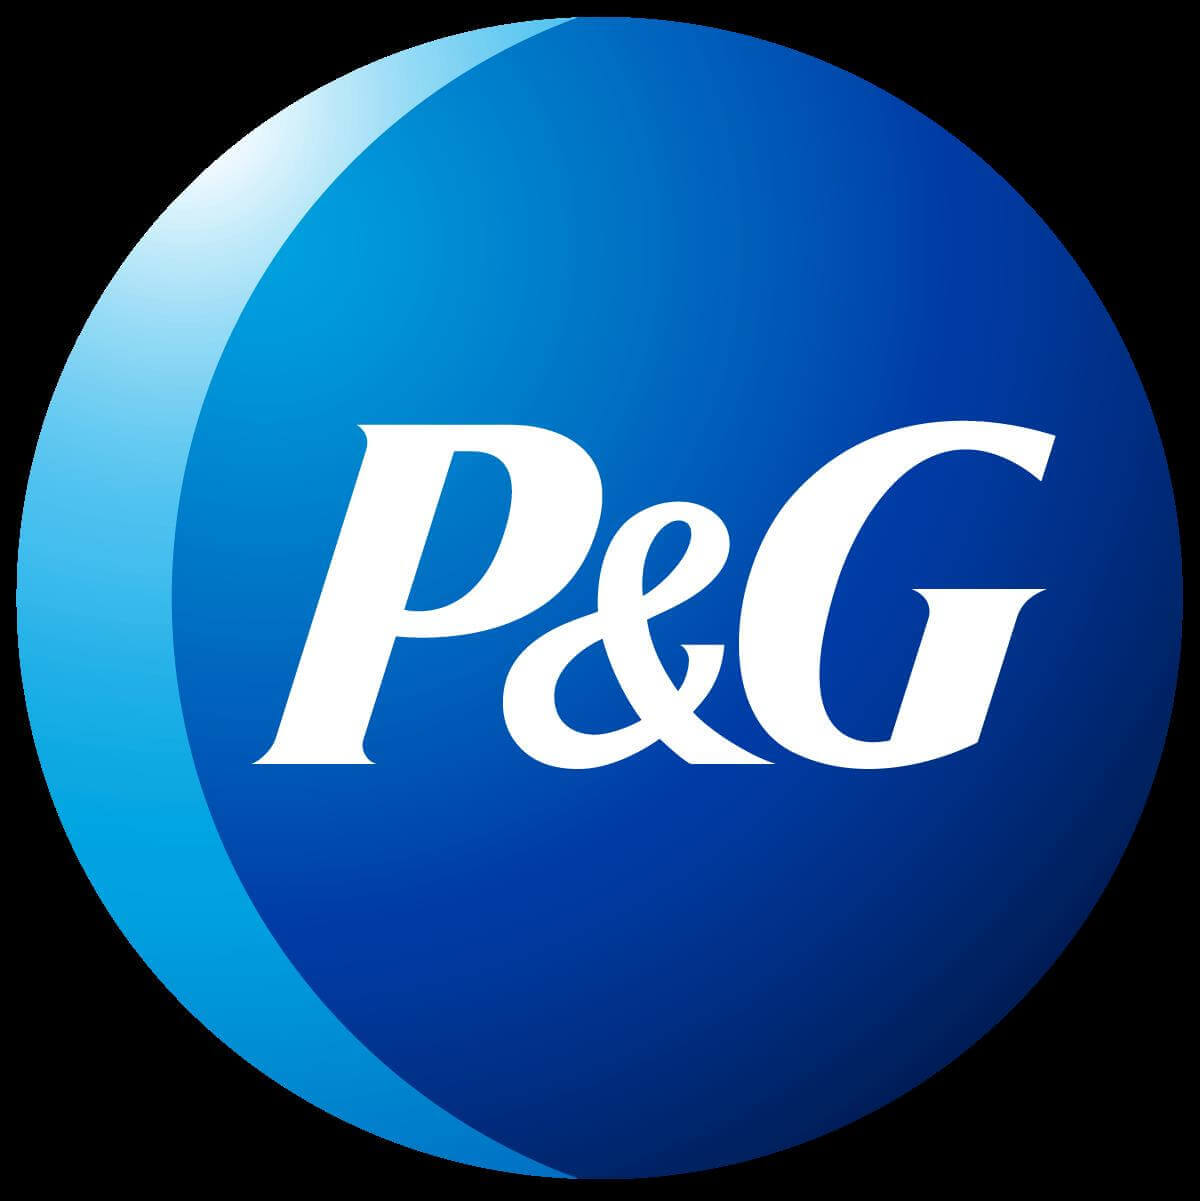 Procter & Gamble طالبين Process Engineer